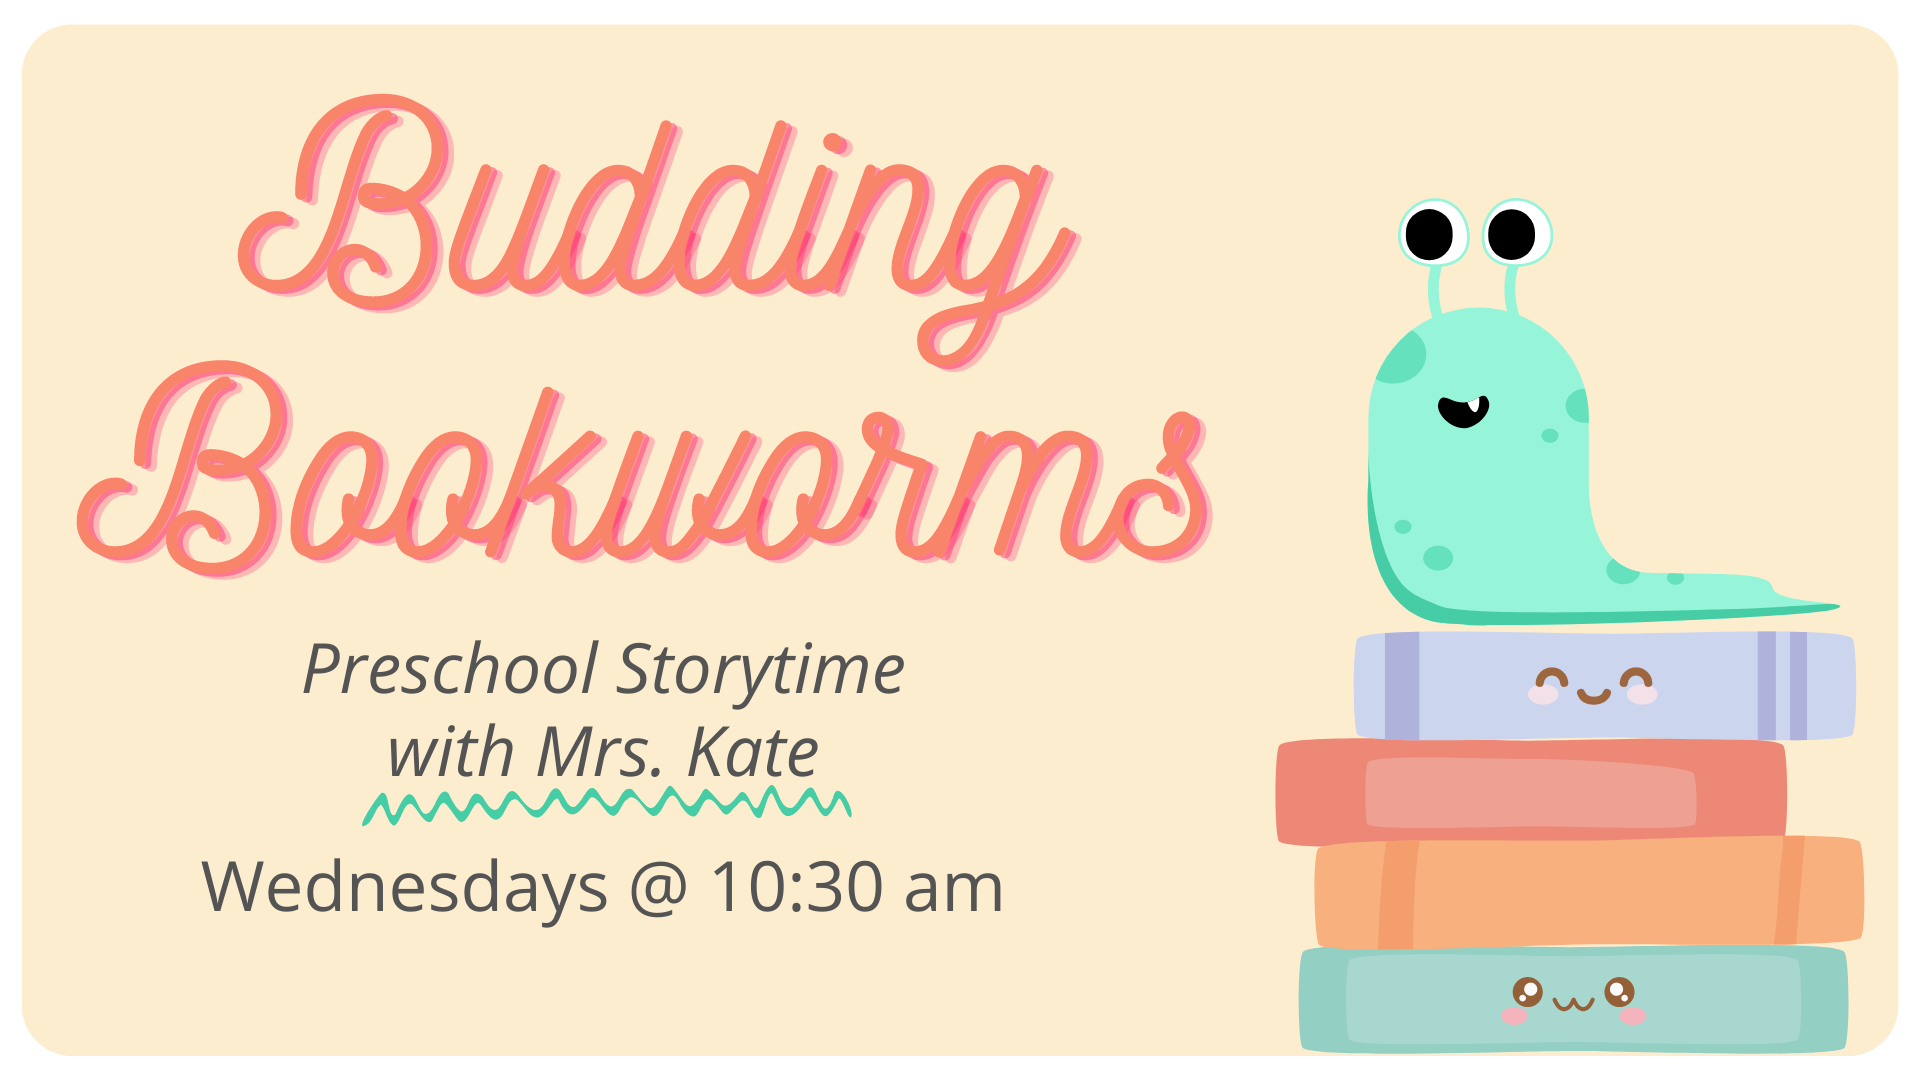 Budding Bookworms Storytime